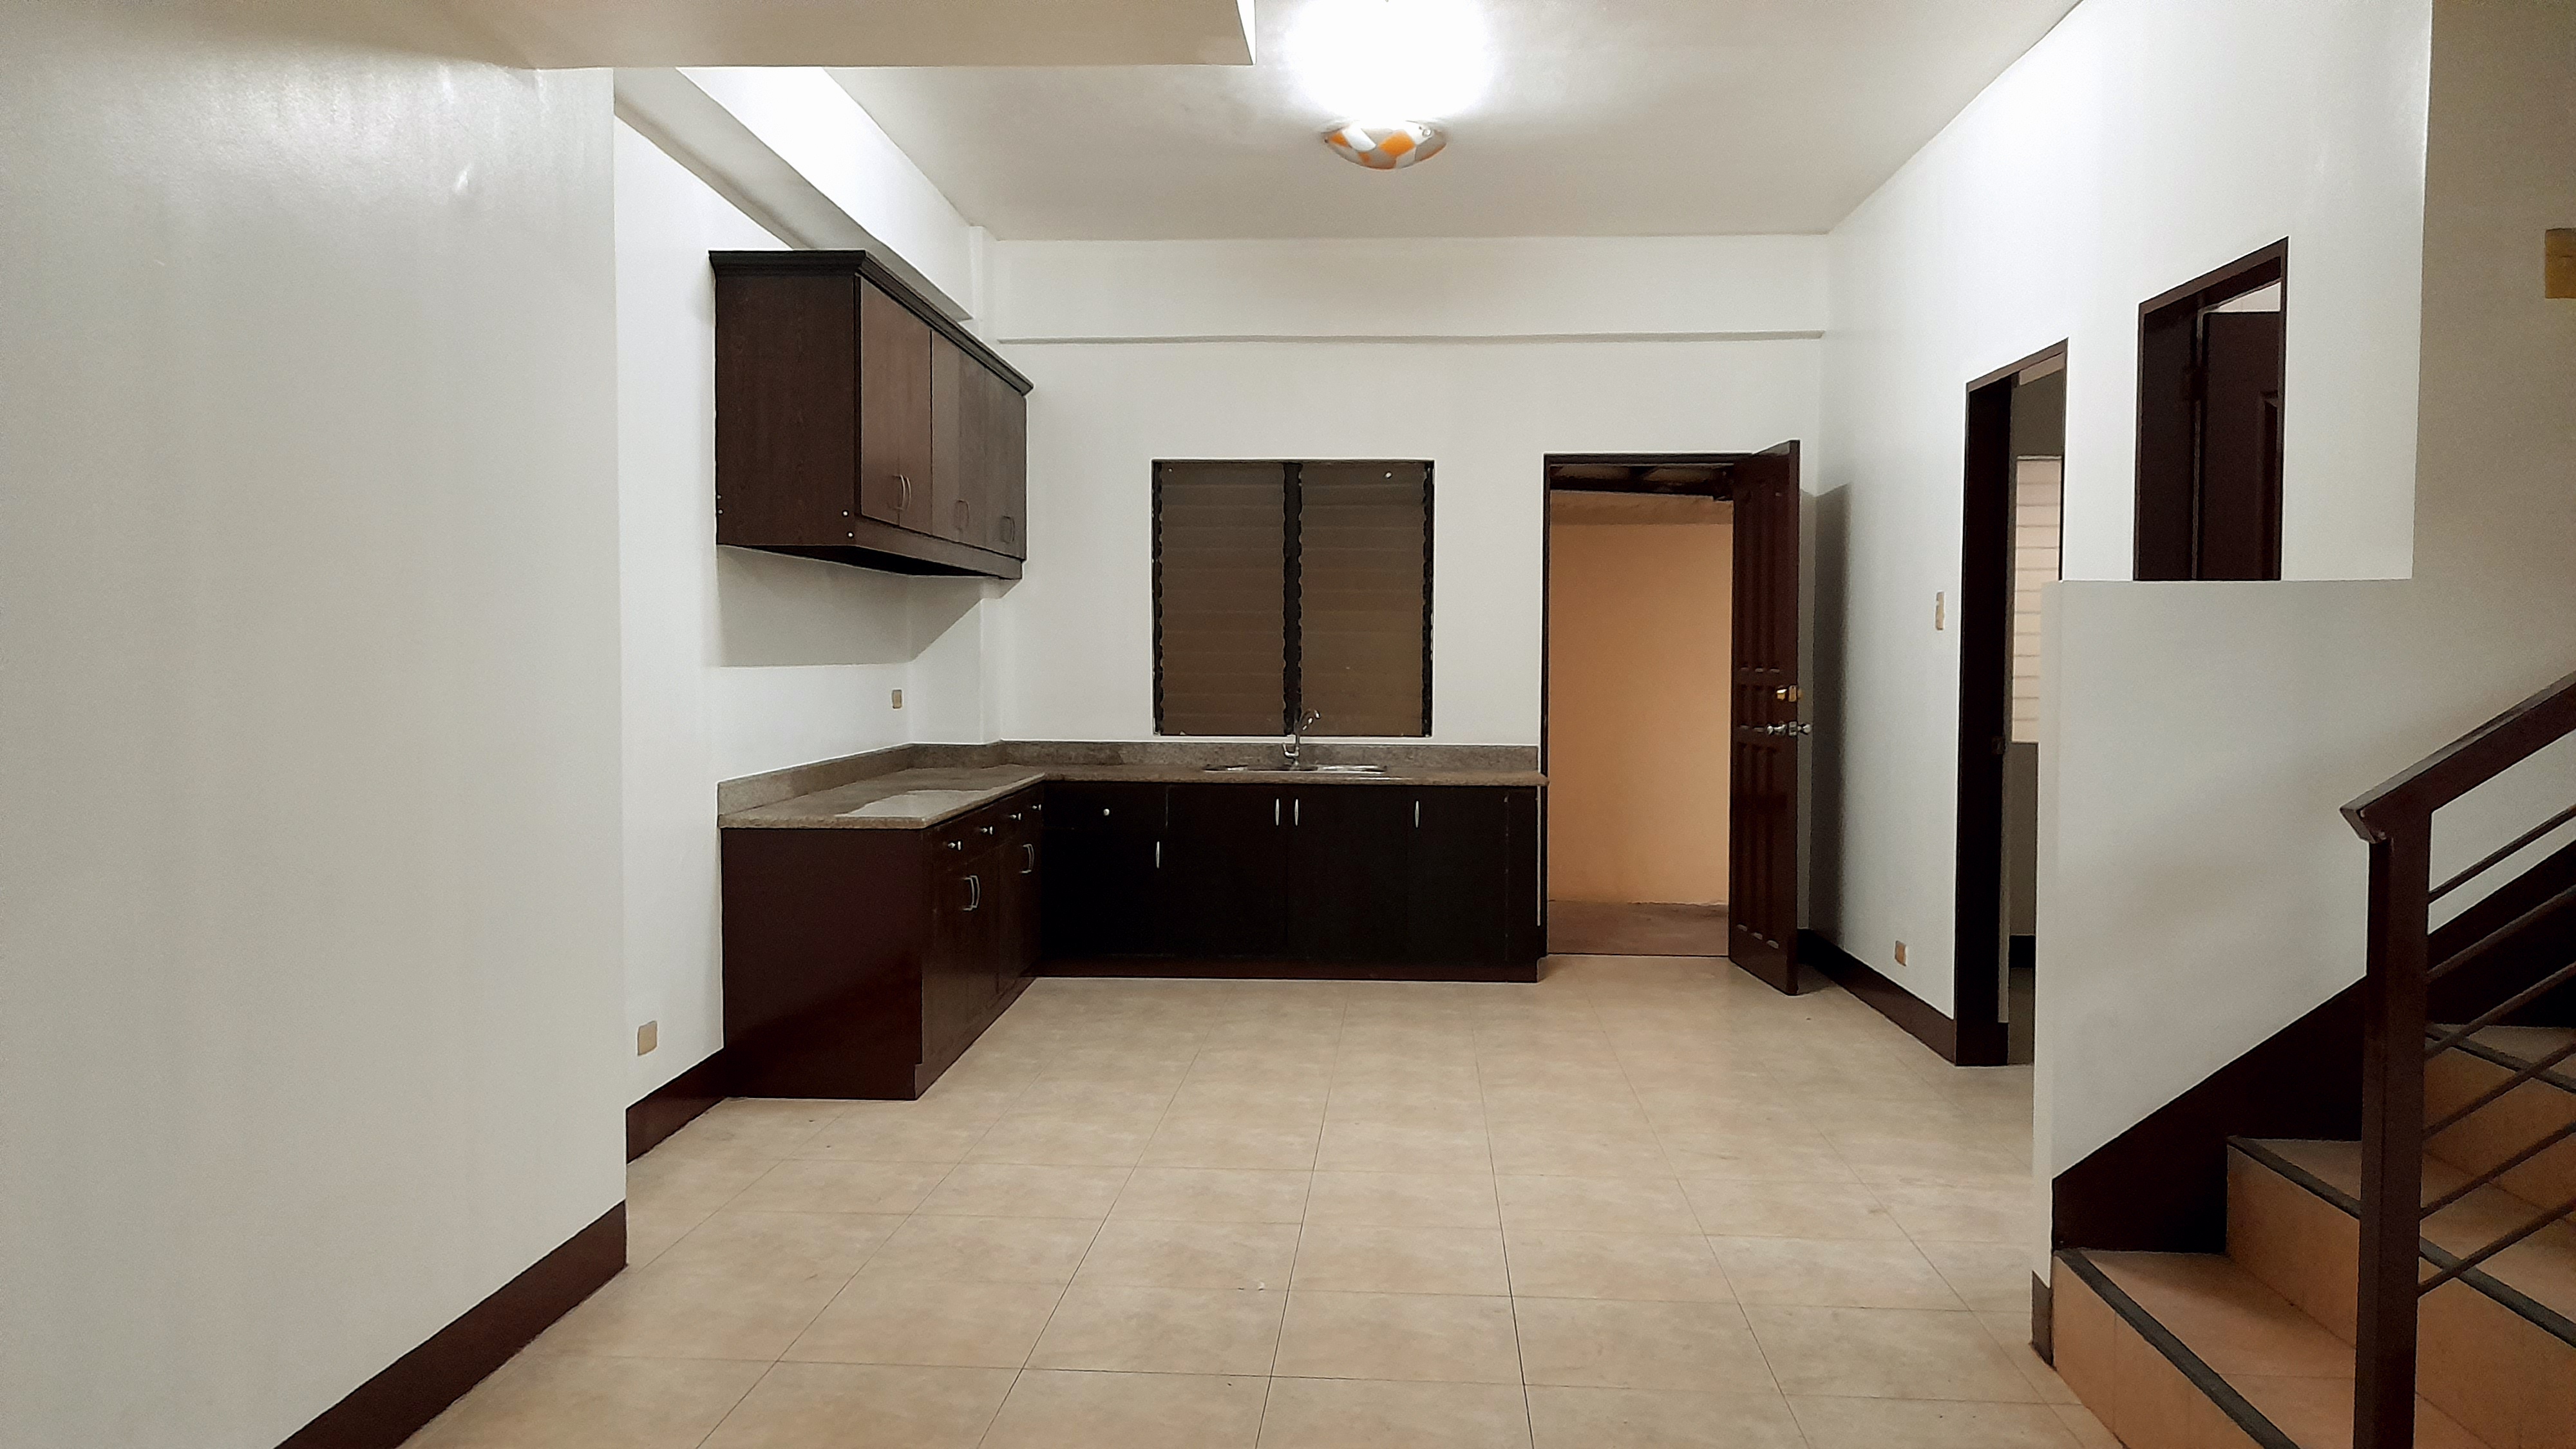 4-bedroom-unfurnished-apartment-in-mabolo-cebu-city-cebu